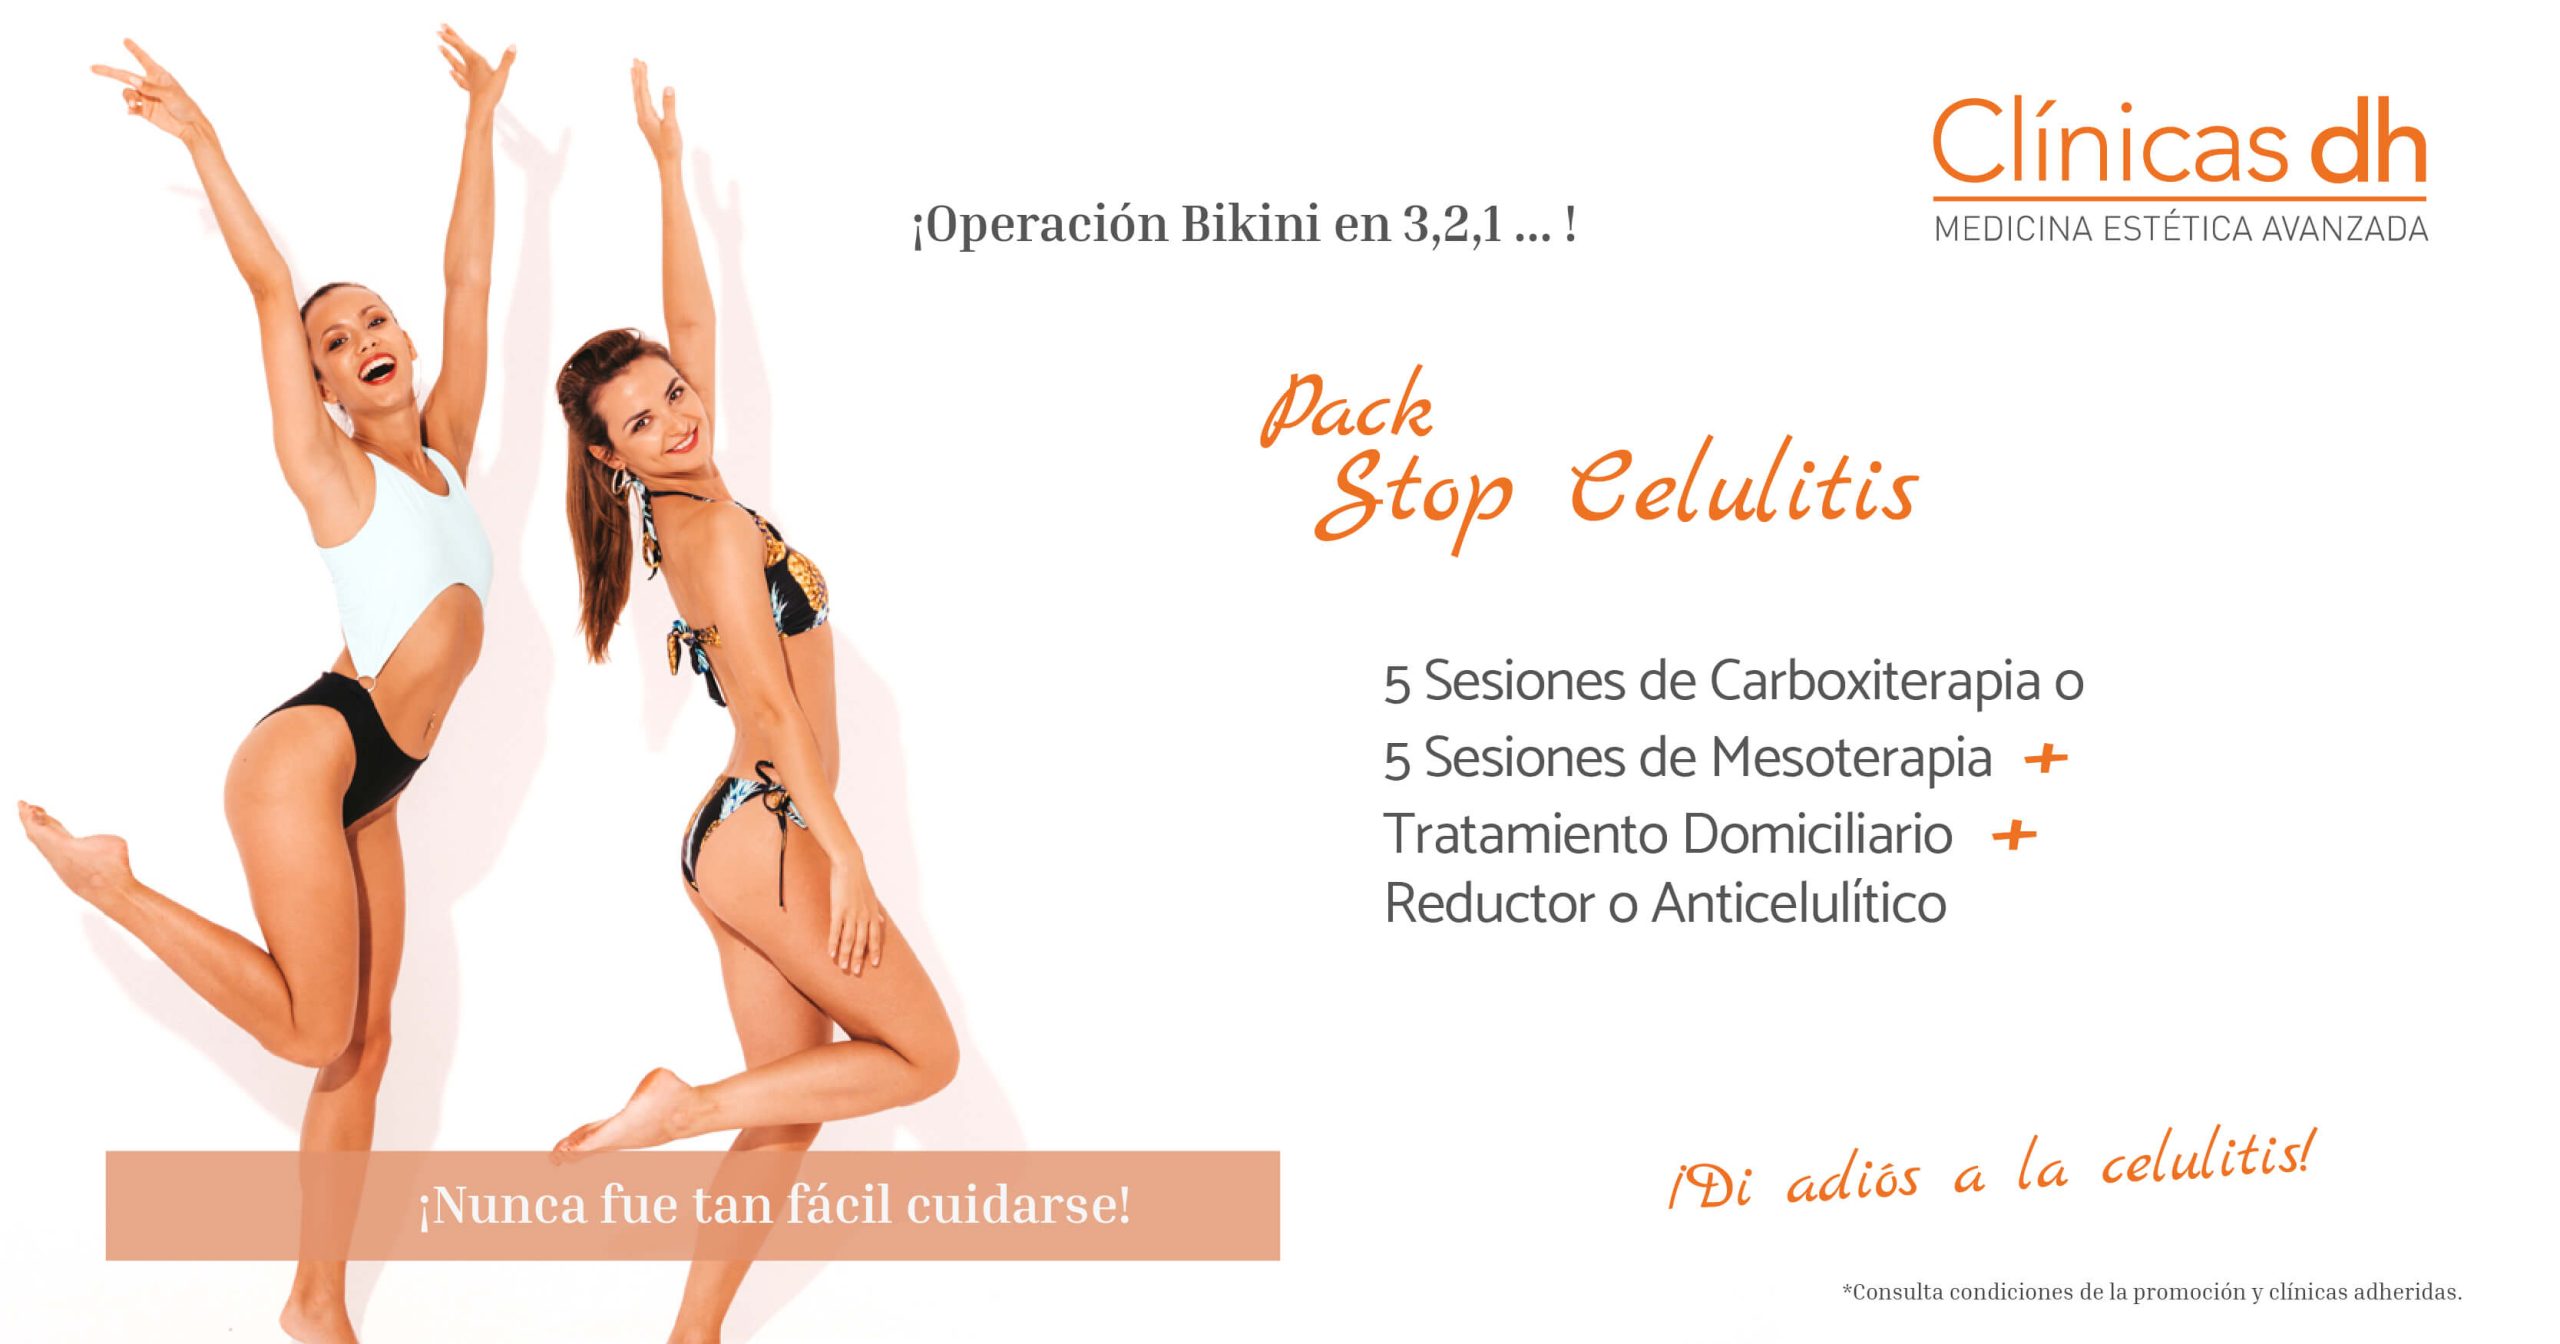 Pack-Stop-Celulitis-ClinicasDH-26